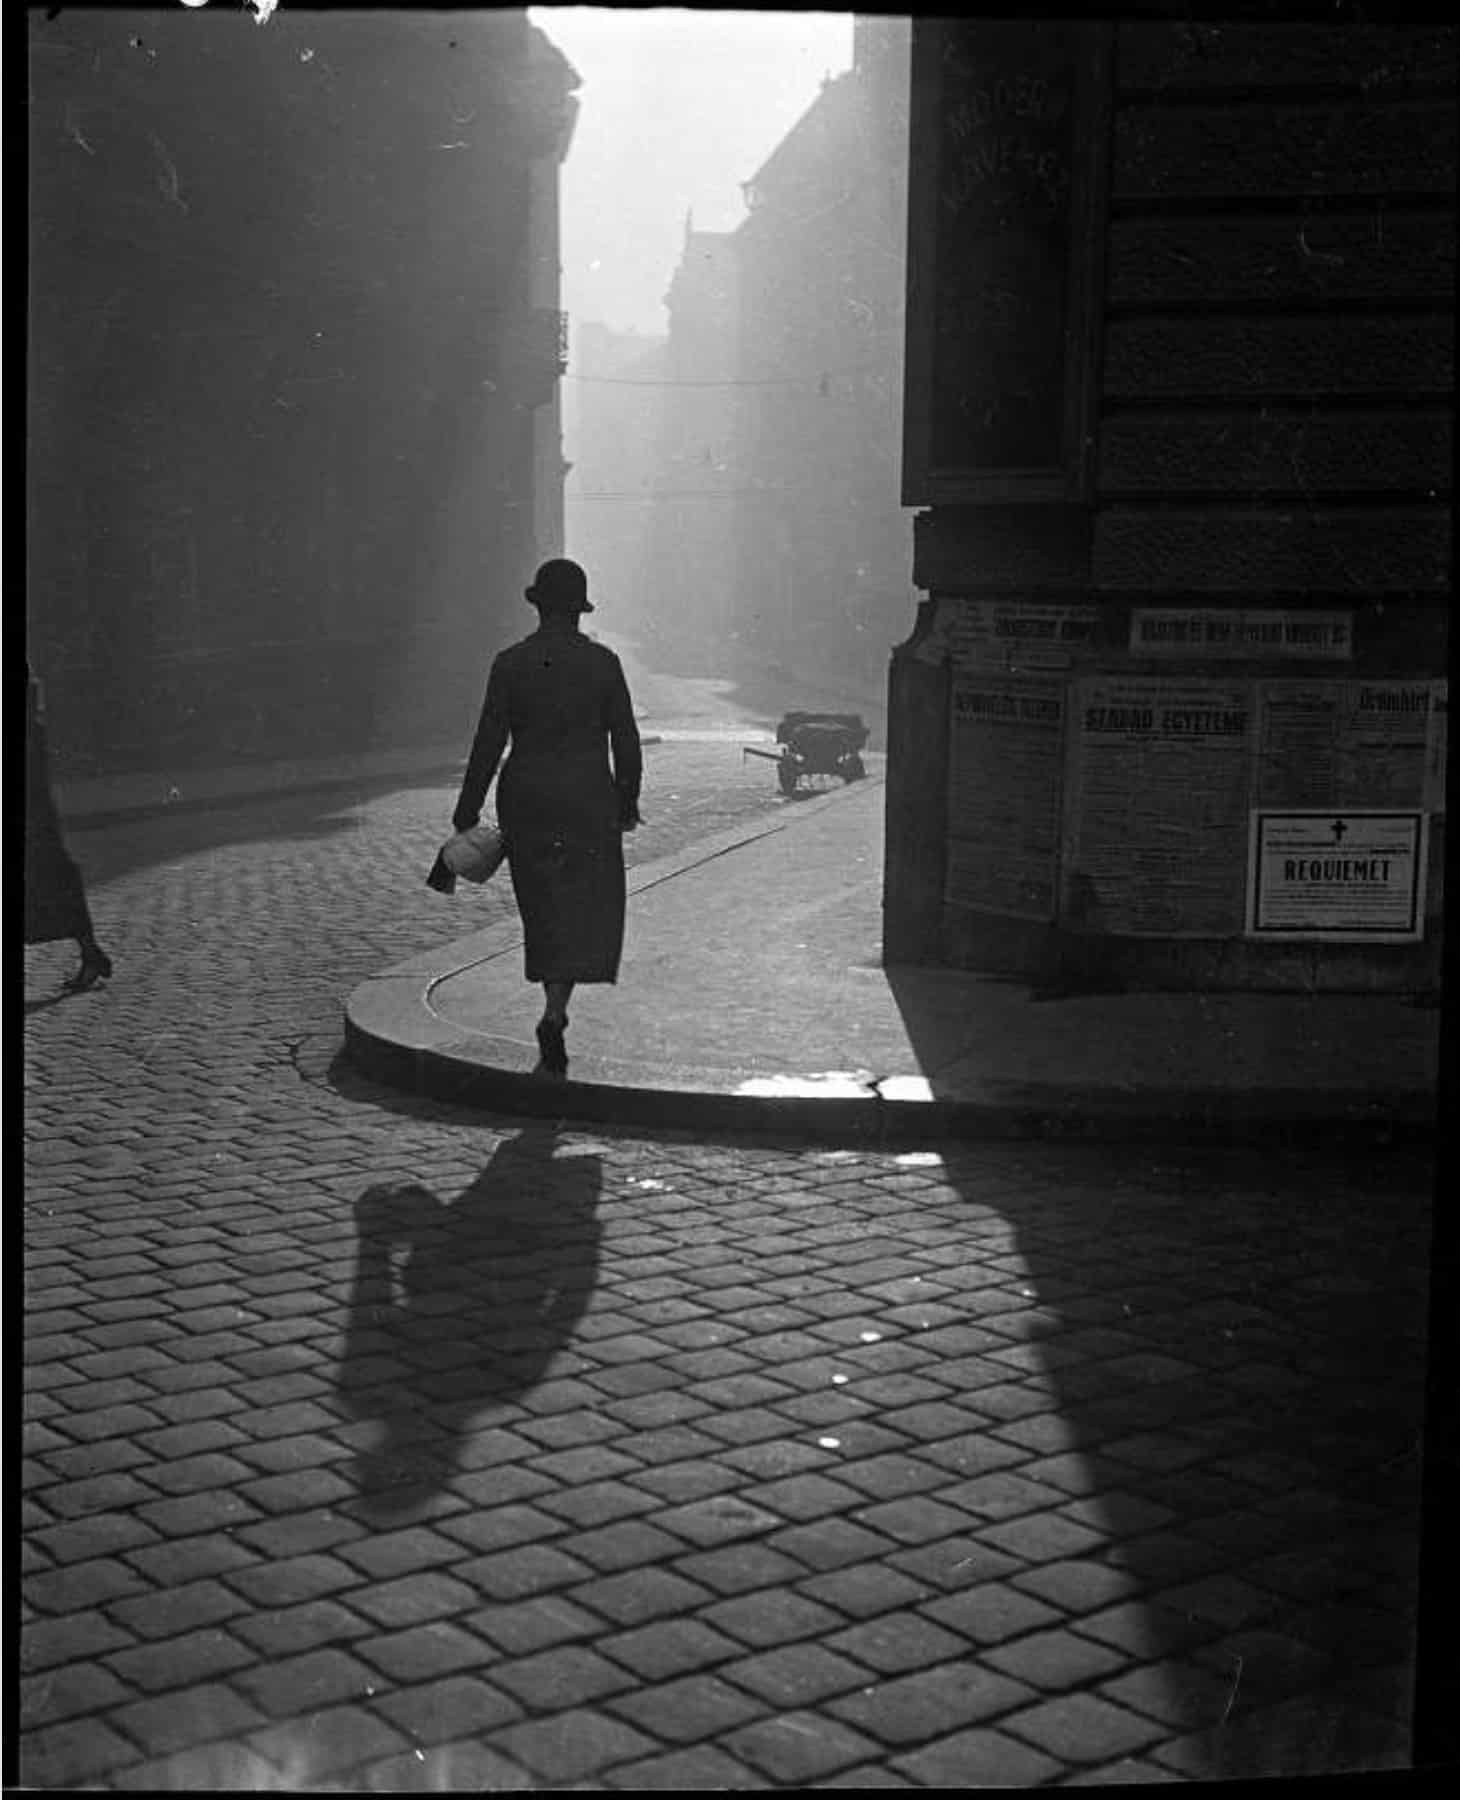 5b. Imre Kinszki, <i>Utca ellenfényben</i> (“Street in backlight”), 1935 © FSZEK